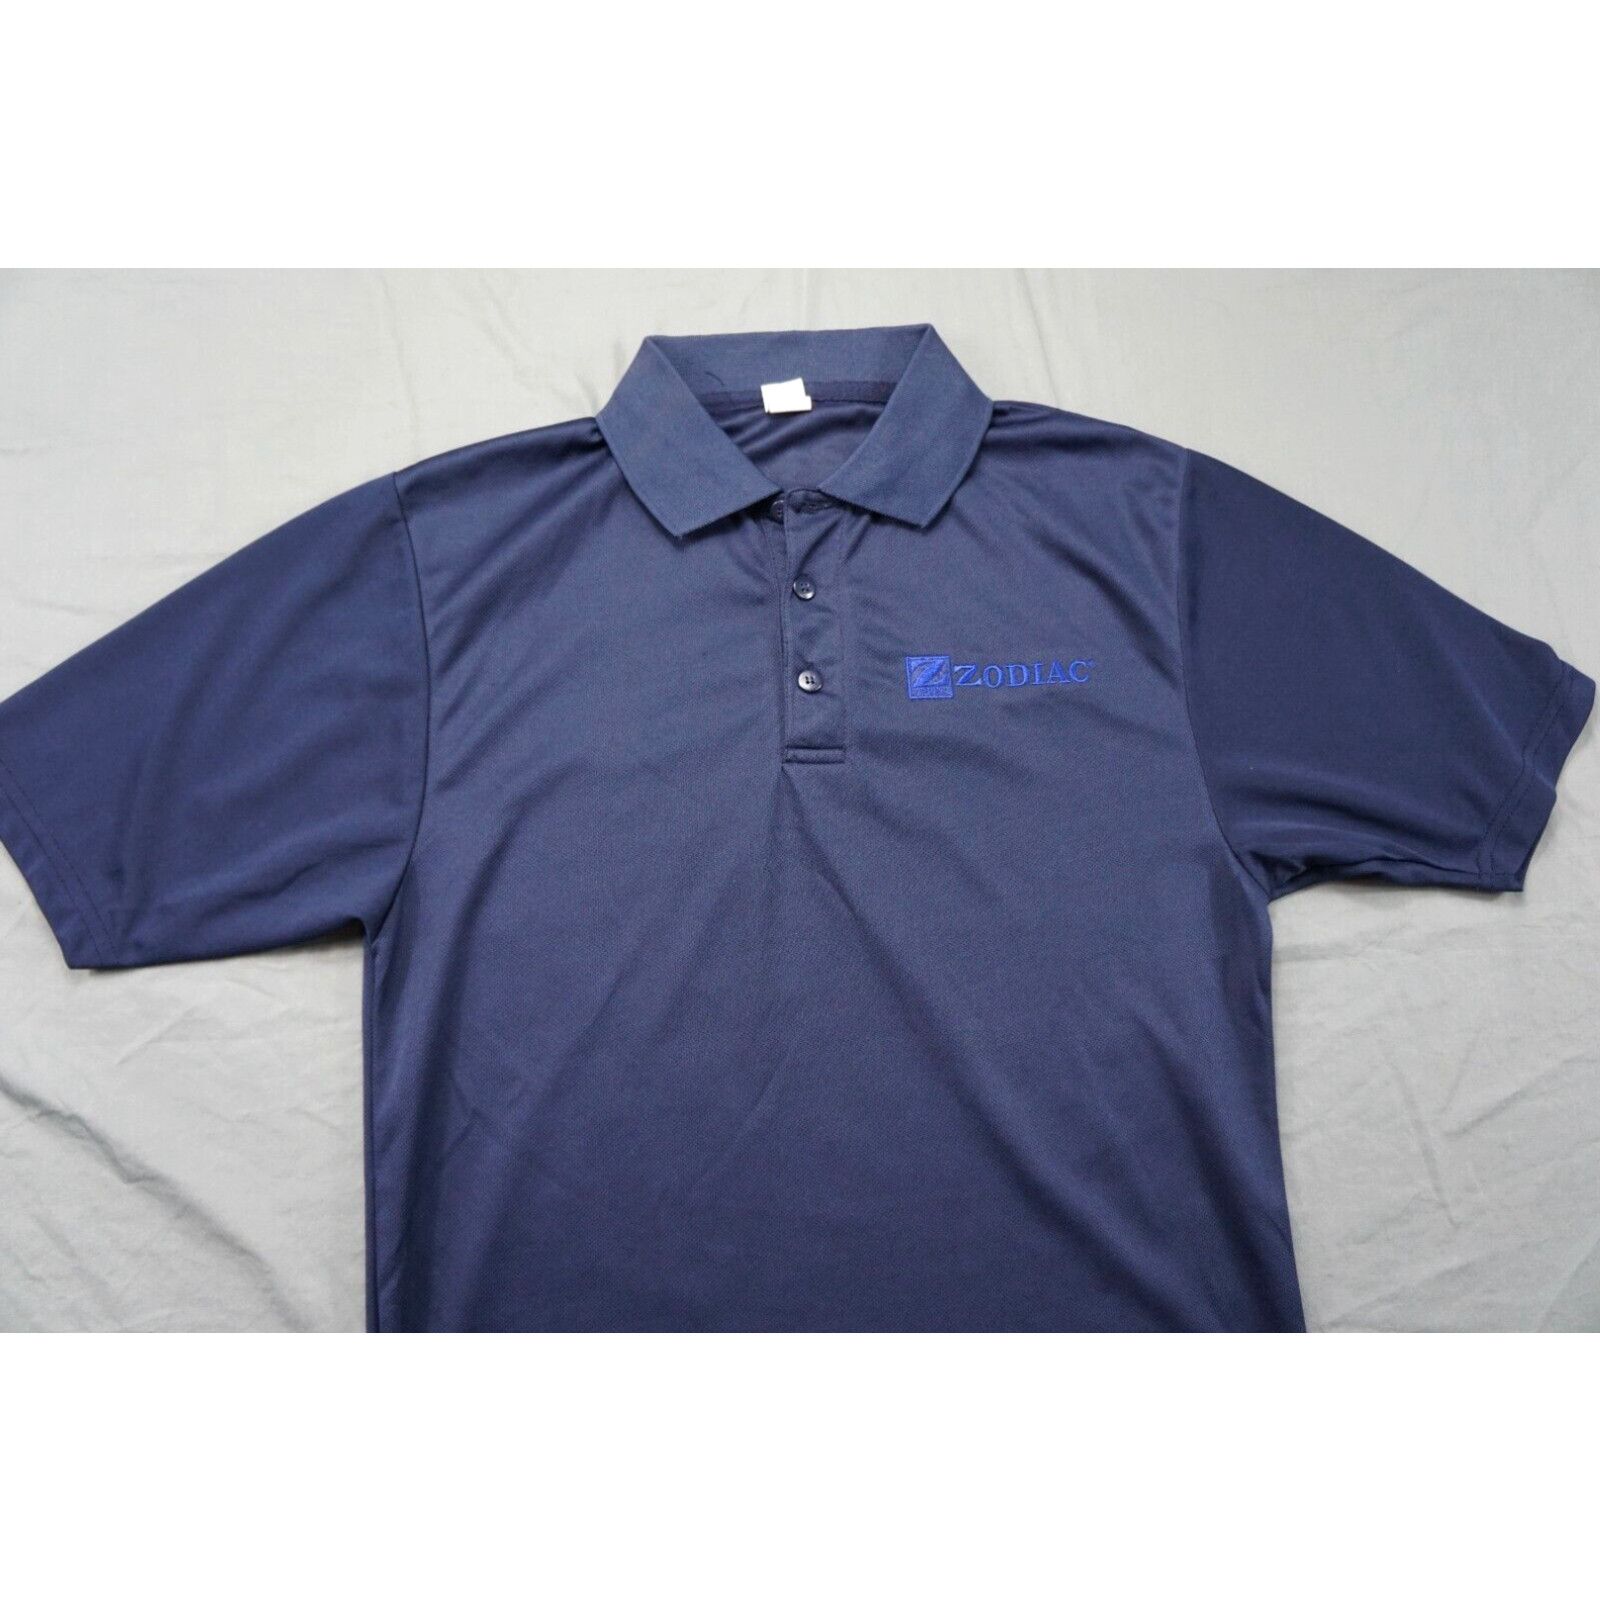 Dunbrooke Dunbrooke Premium Polo Golf Shirt. Zodiac Stitched. Navy Blue, Men's S. EUC!! Size US S / EU 44-46 / 1 - 1 Preview